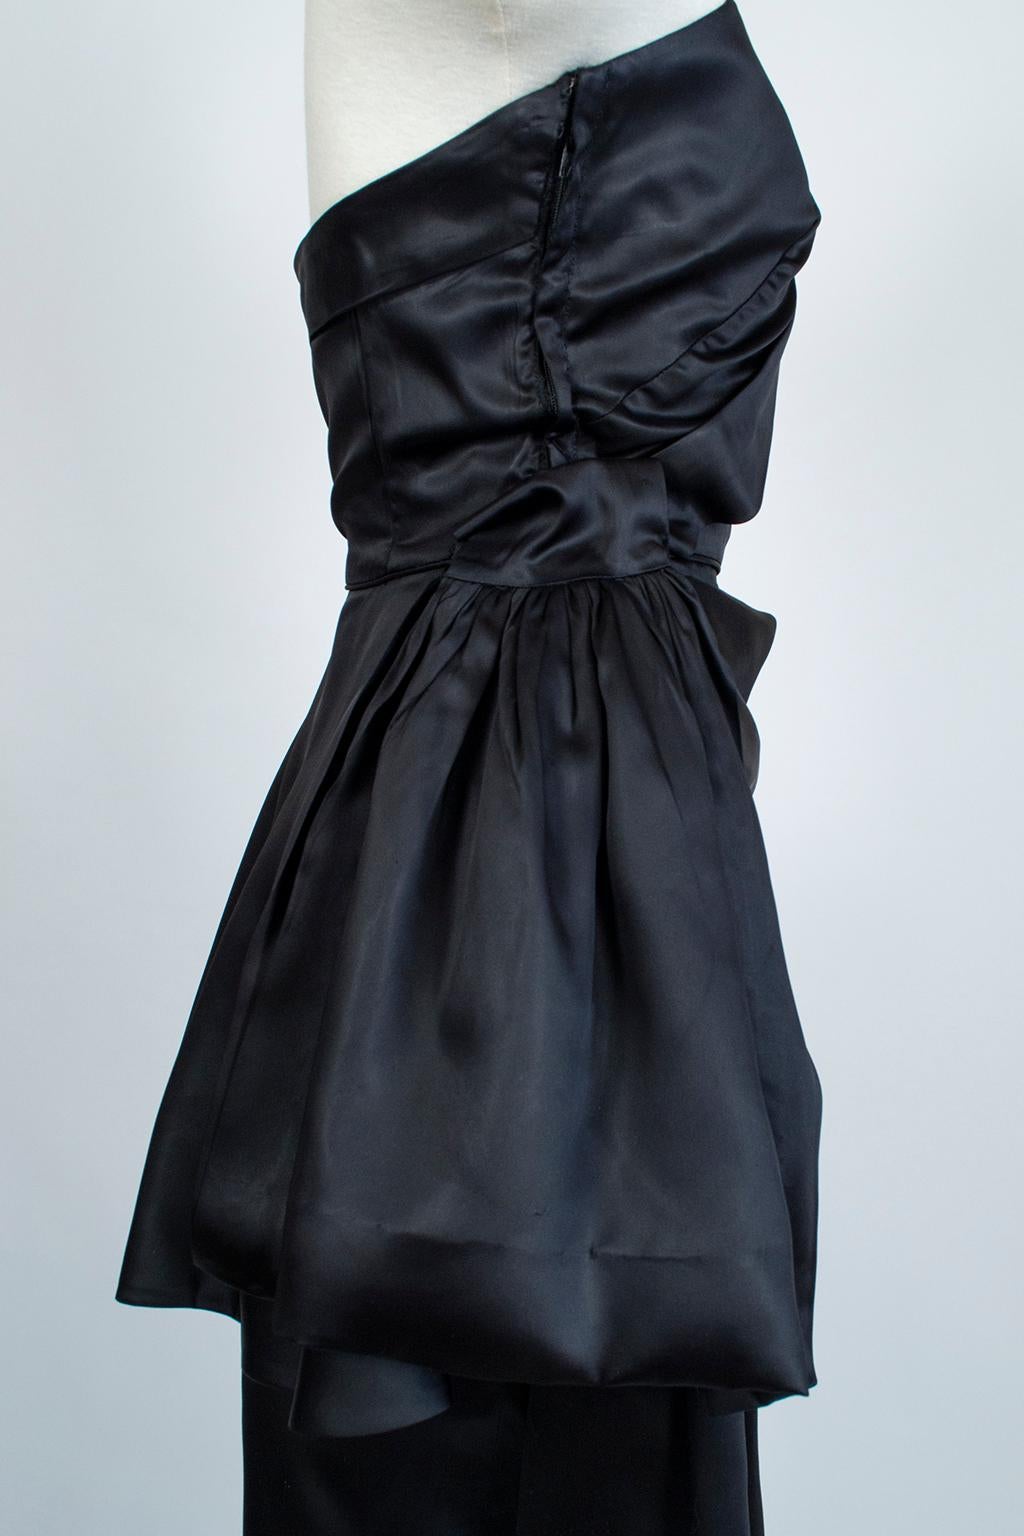 Black Satin Asymmetrical Mermaid Peplum Gown with Detachable Hip Sash- XS, 1950s 3